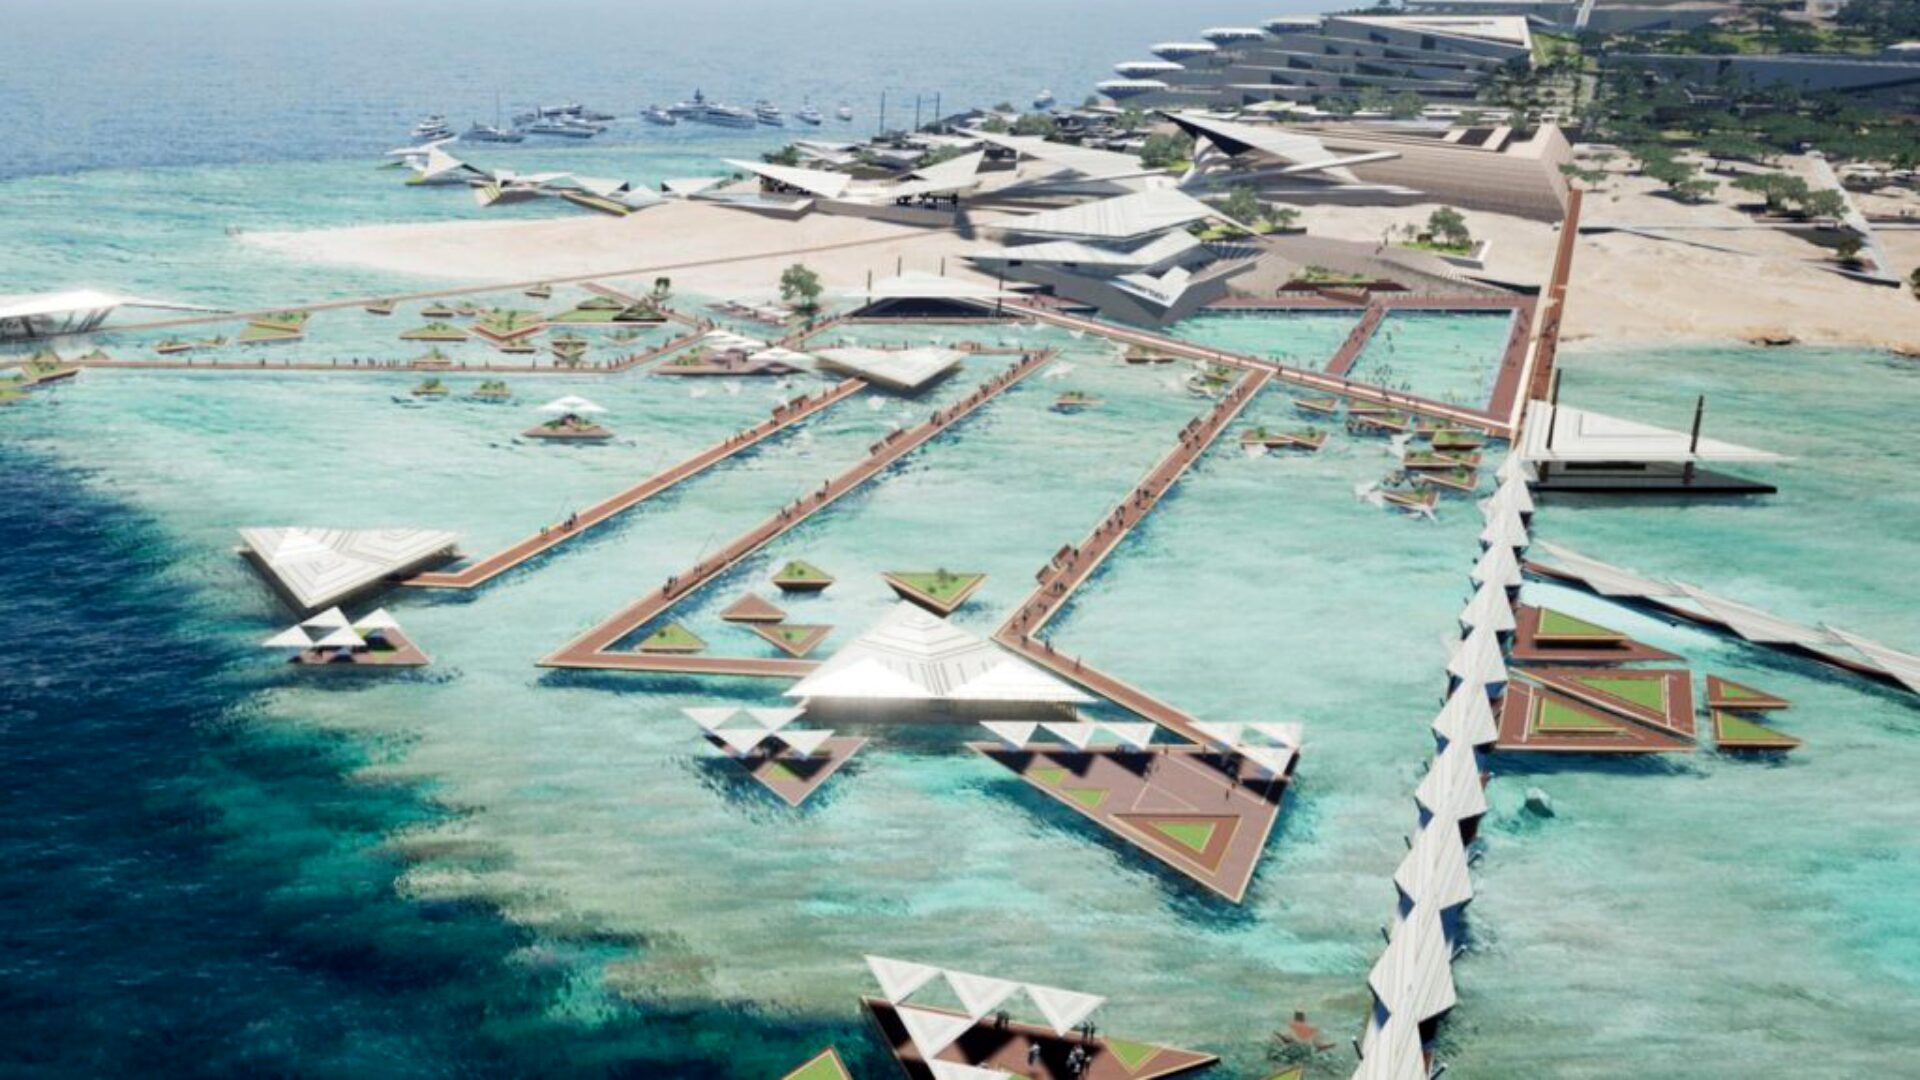 NEOM provides fresh updates on its latest luxury island project